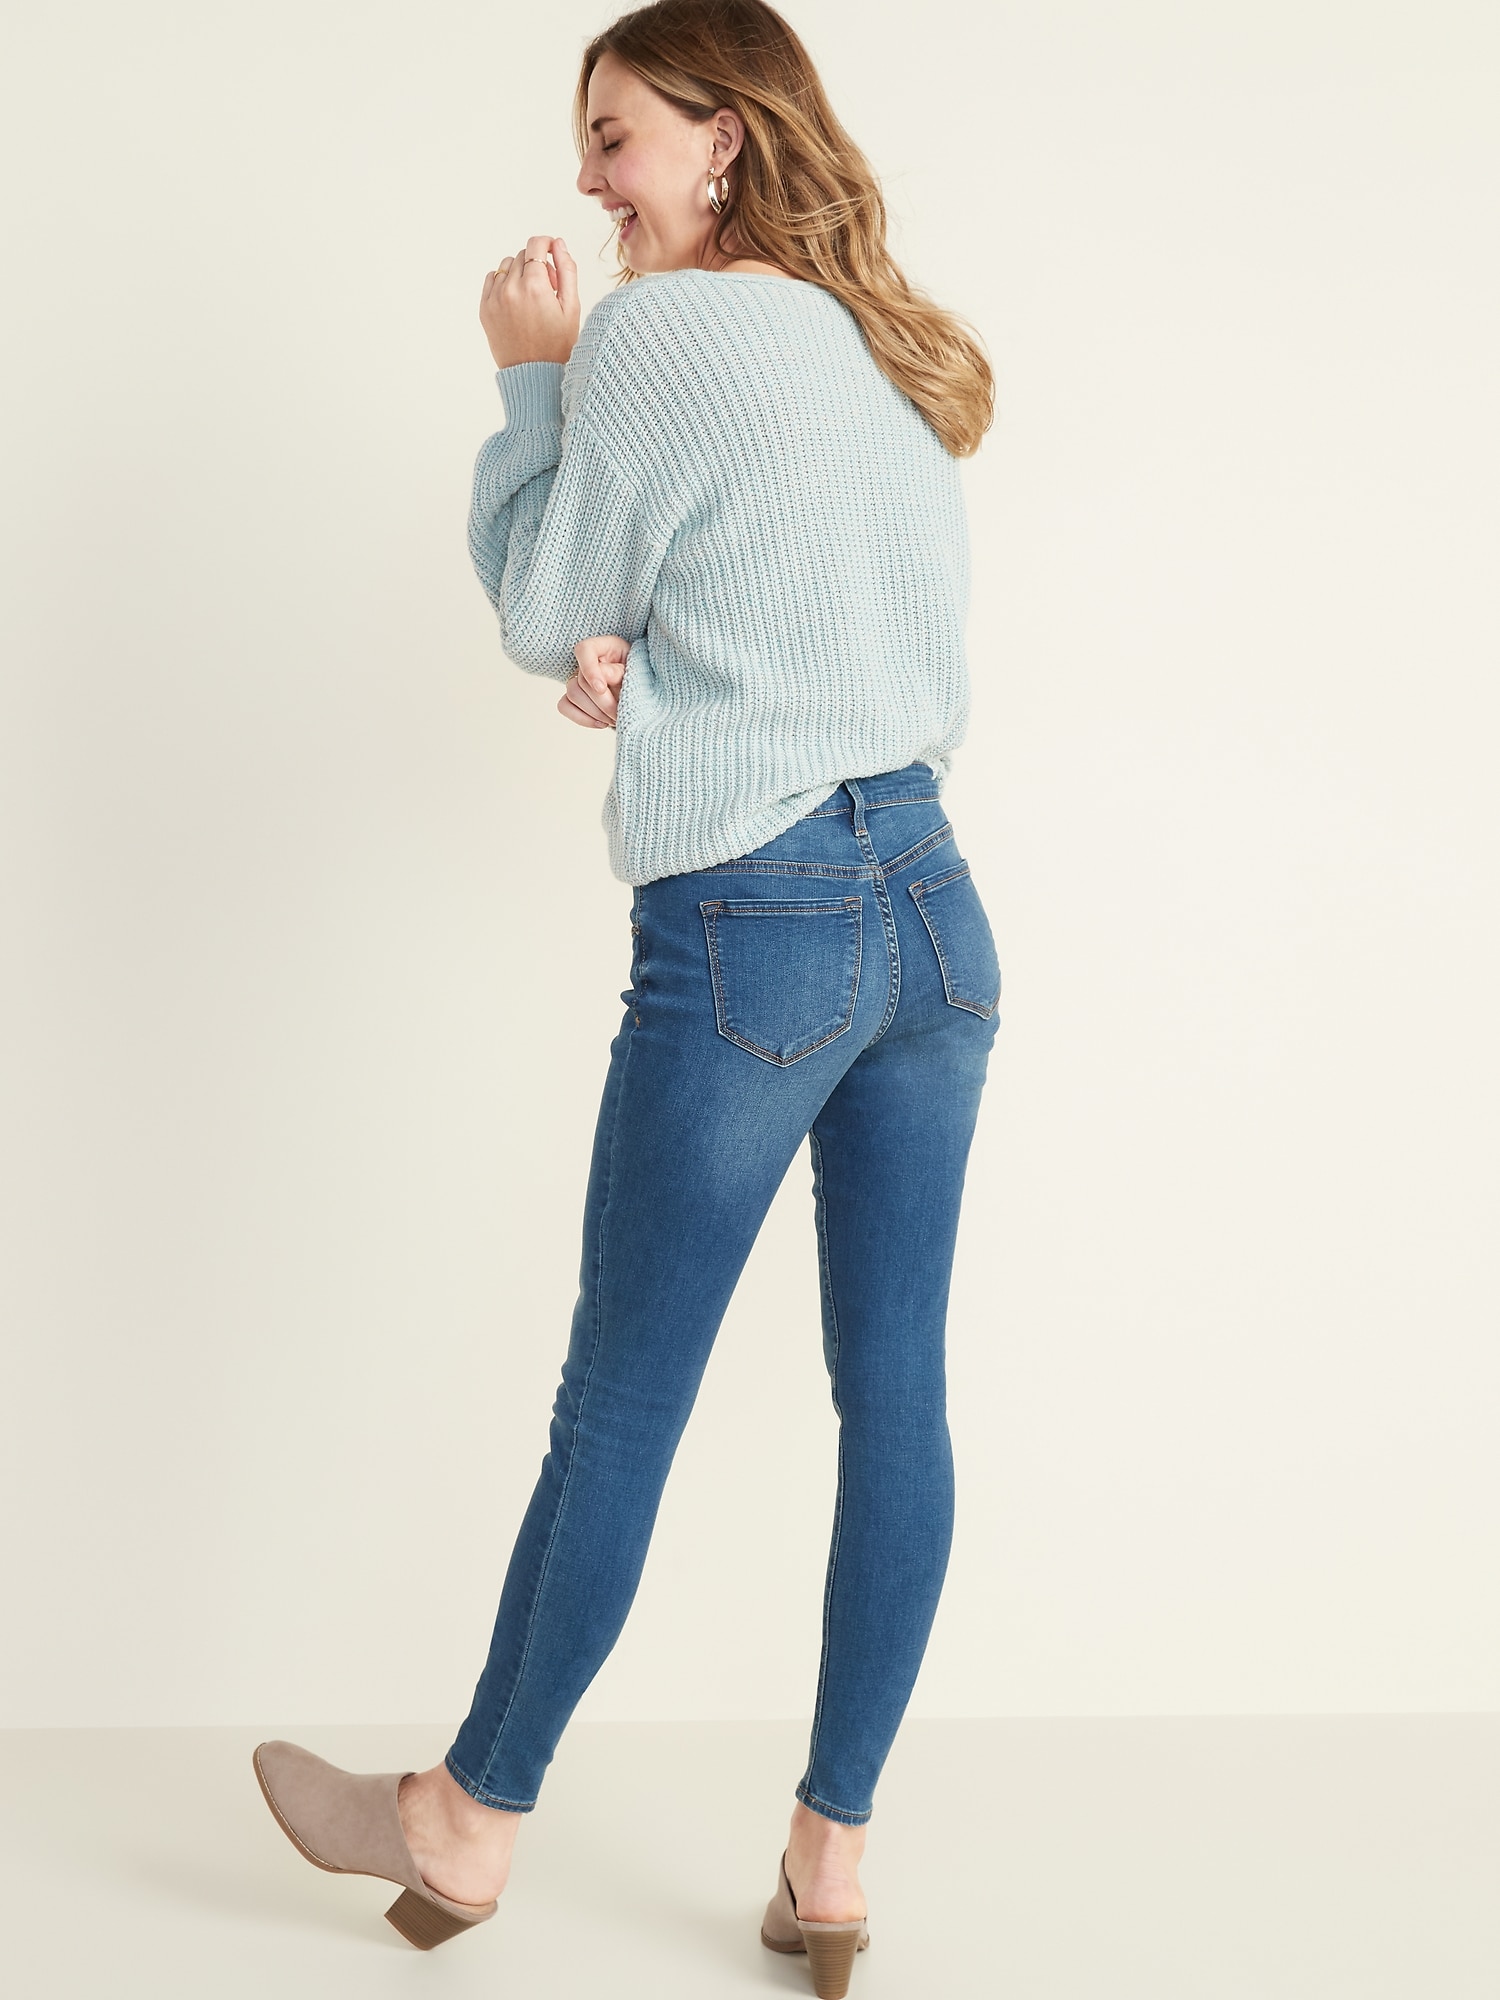 low rise skinny jeans womens uk